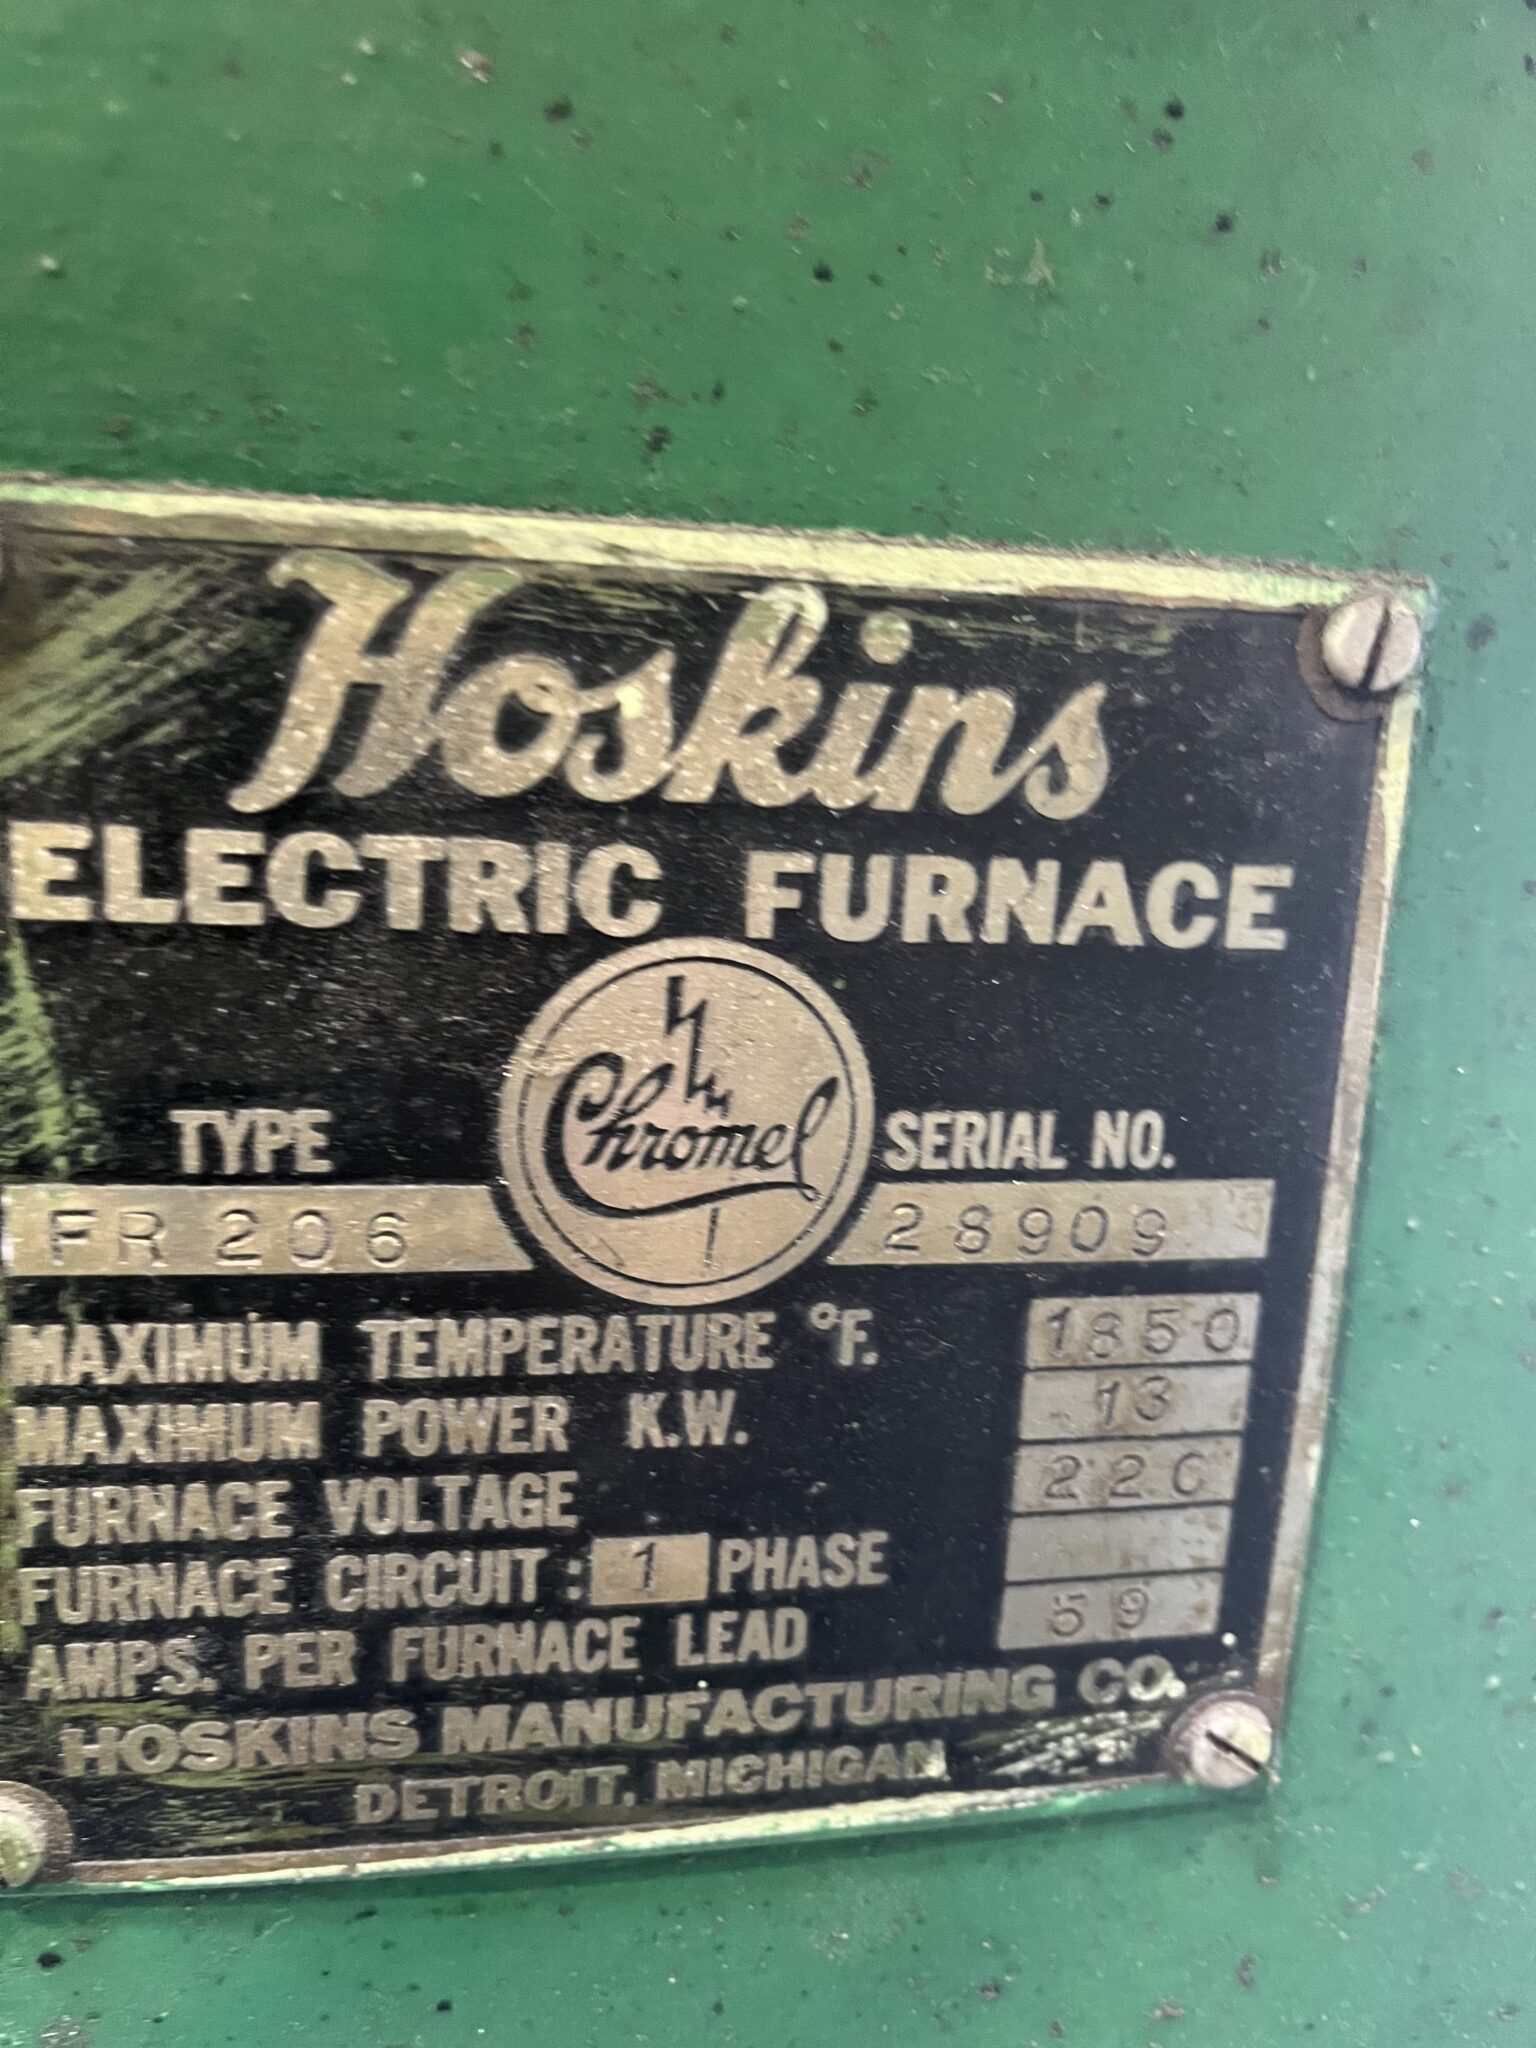 Hoskins Electric Furnace